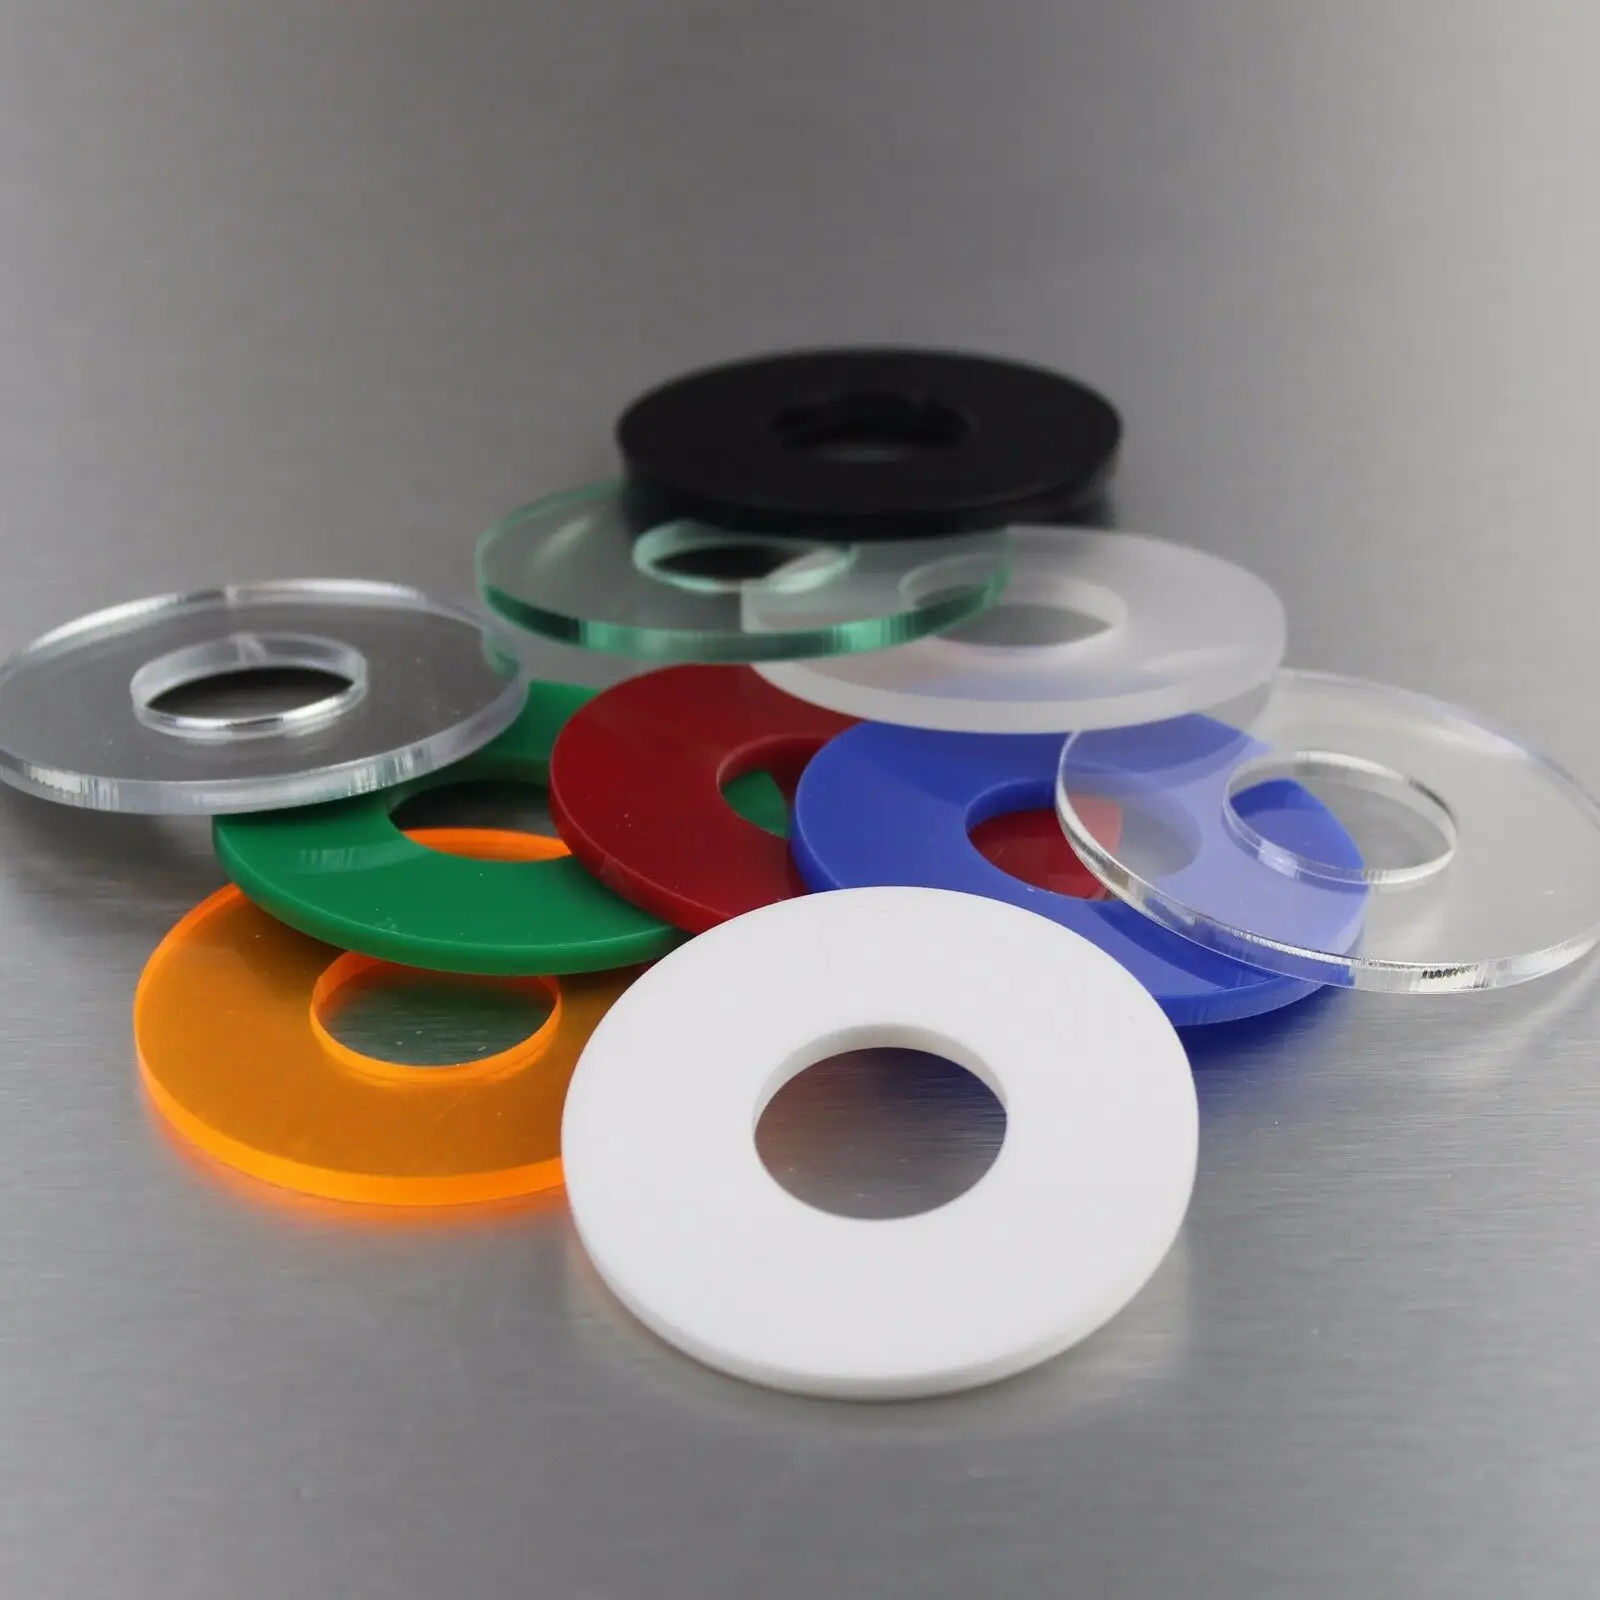 Disc YELLOW Plastic Circles Perspex Laser Cut Acrylic Perspex